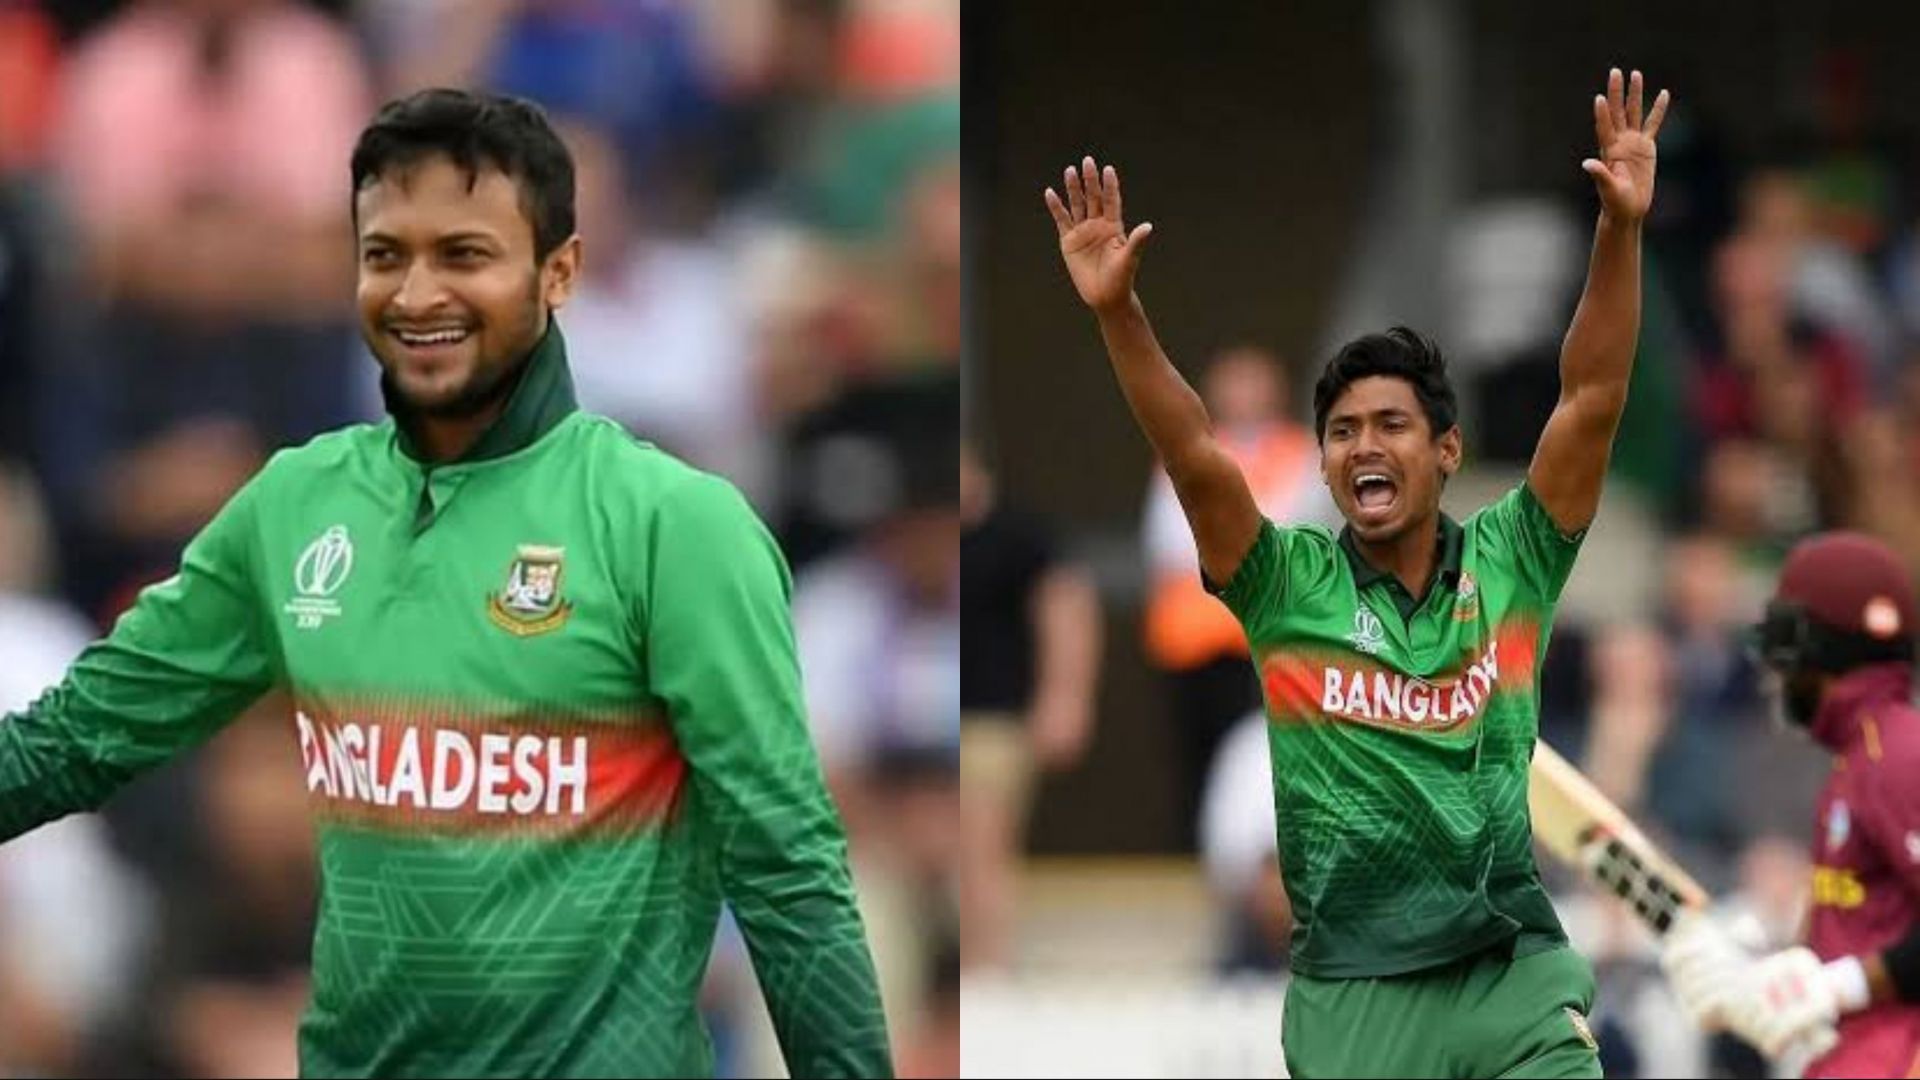 Shakib Al Hasan and Mustafizur Rahman performed brilliantly for Bangladesh in ODI cricket this year.